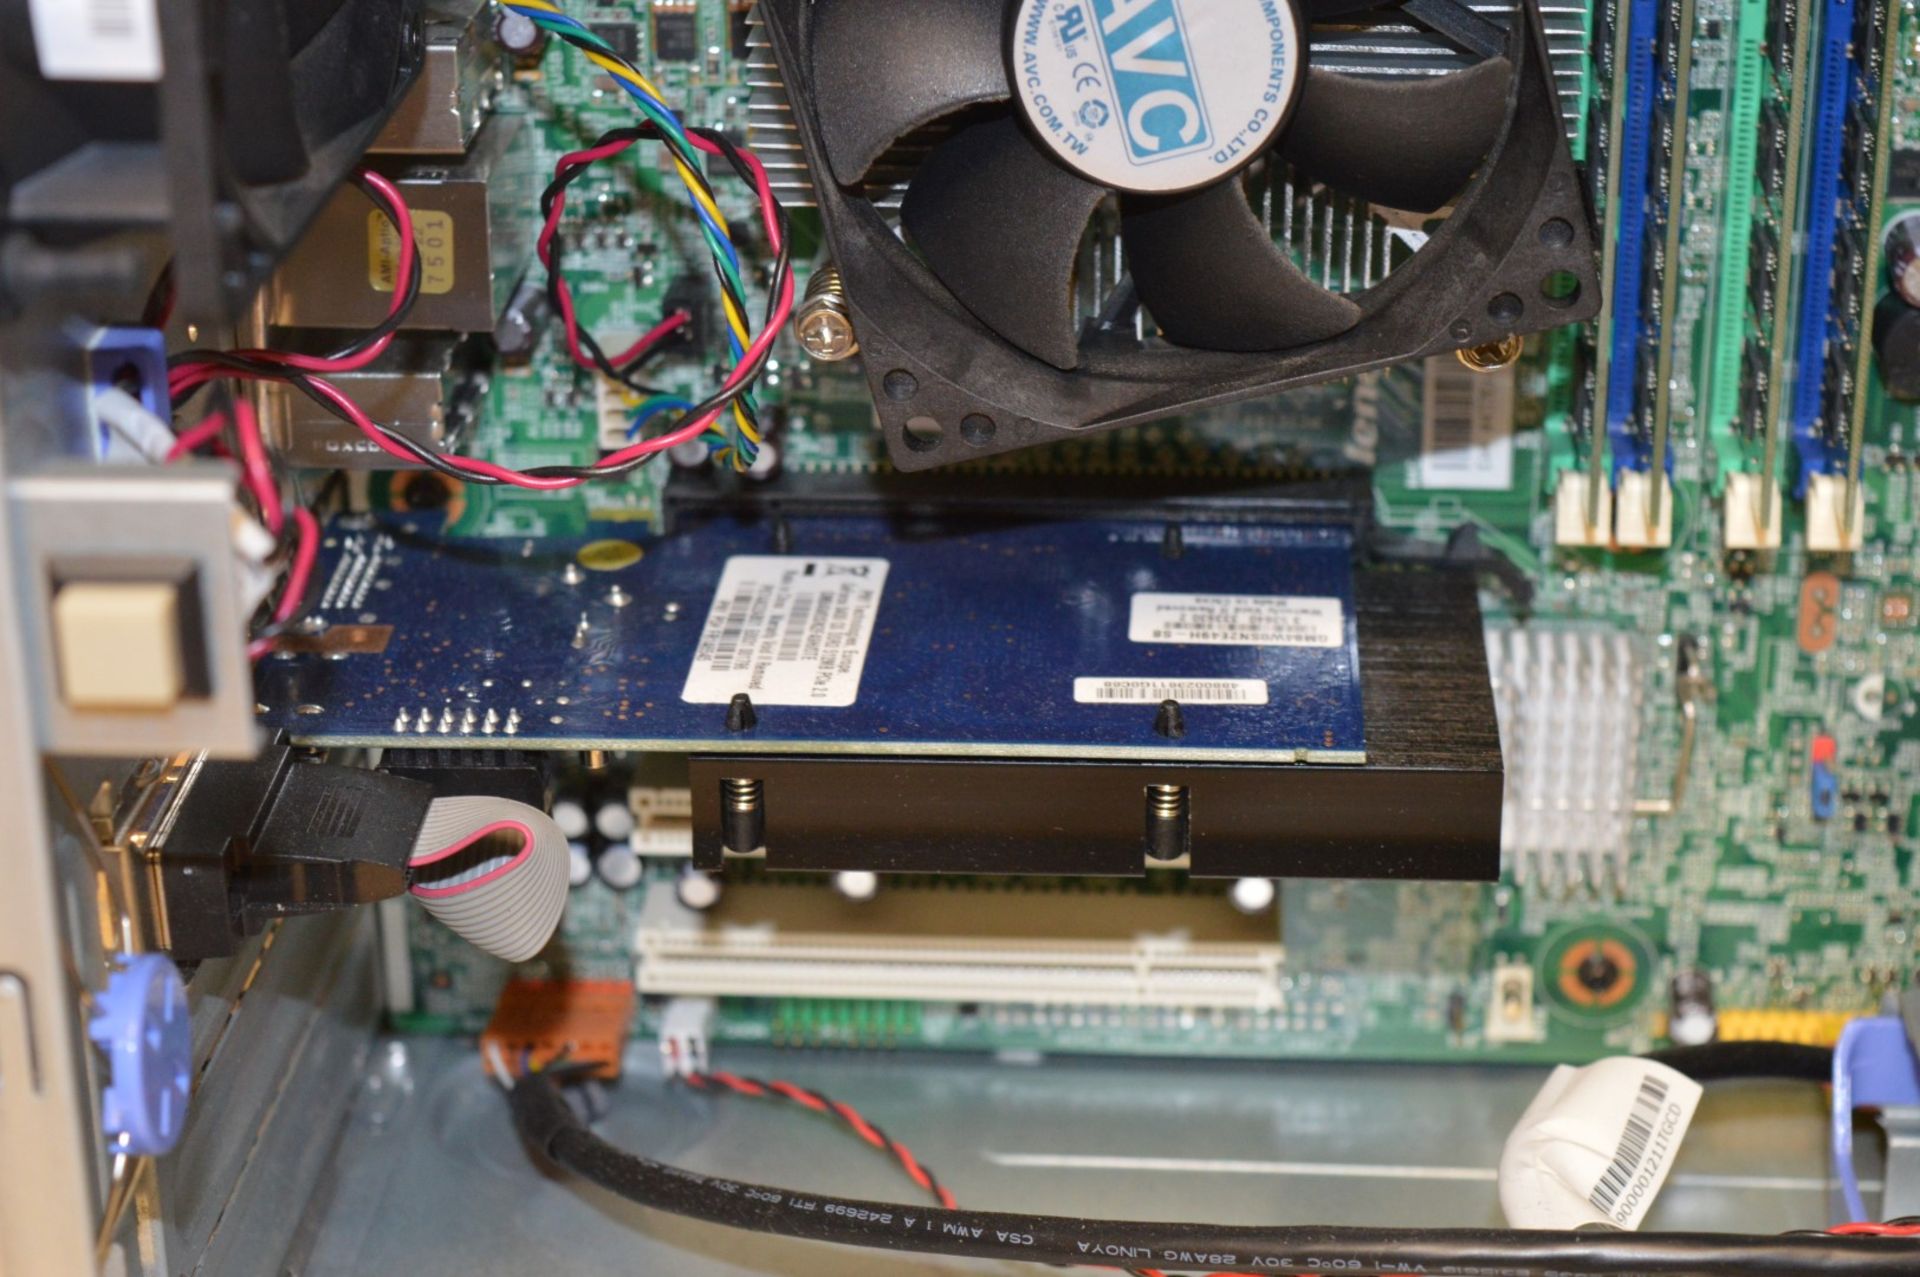 1 x Lenovo Thinkcentre M91p Desktop Computer - Intel Core i5 2400 3.1ghz Quad Core Processor - - Image 3 of 7